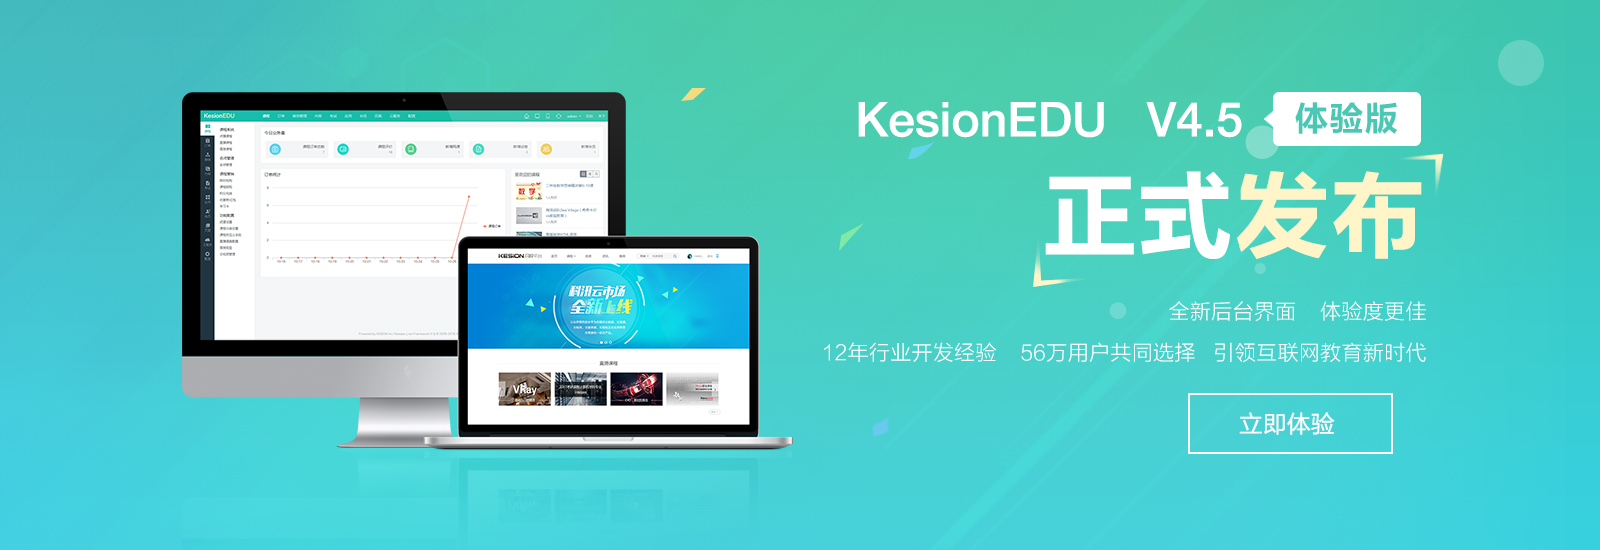 KesionEDU 在线网校系统 V4.5 体验版   第 1 张